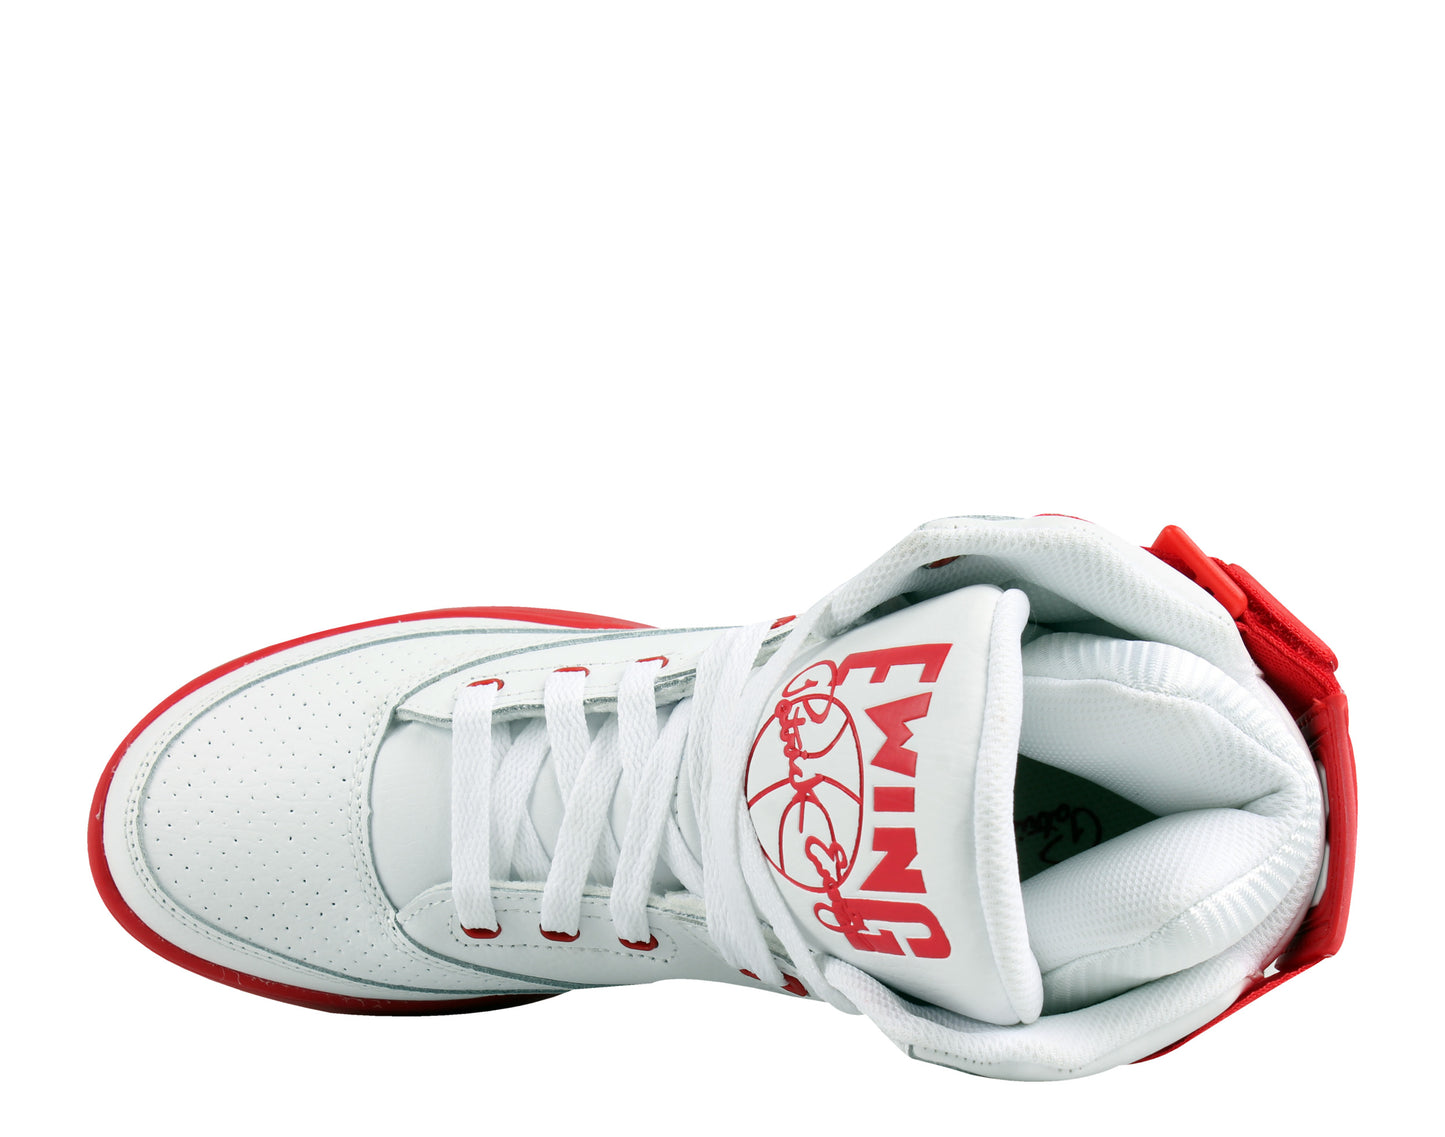 Ewing Athletics Ewing 33 Hi White/Red Men's Basketball Shoes 1BM00554-128